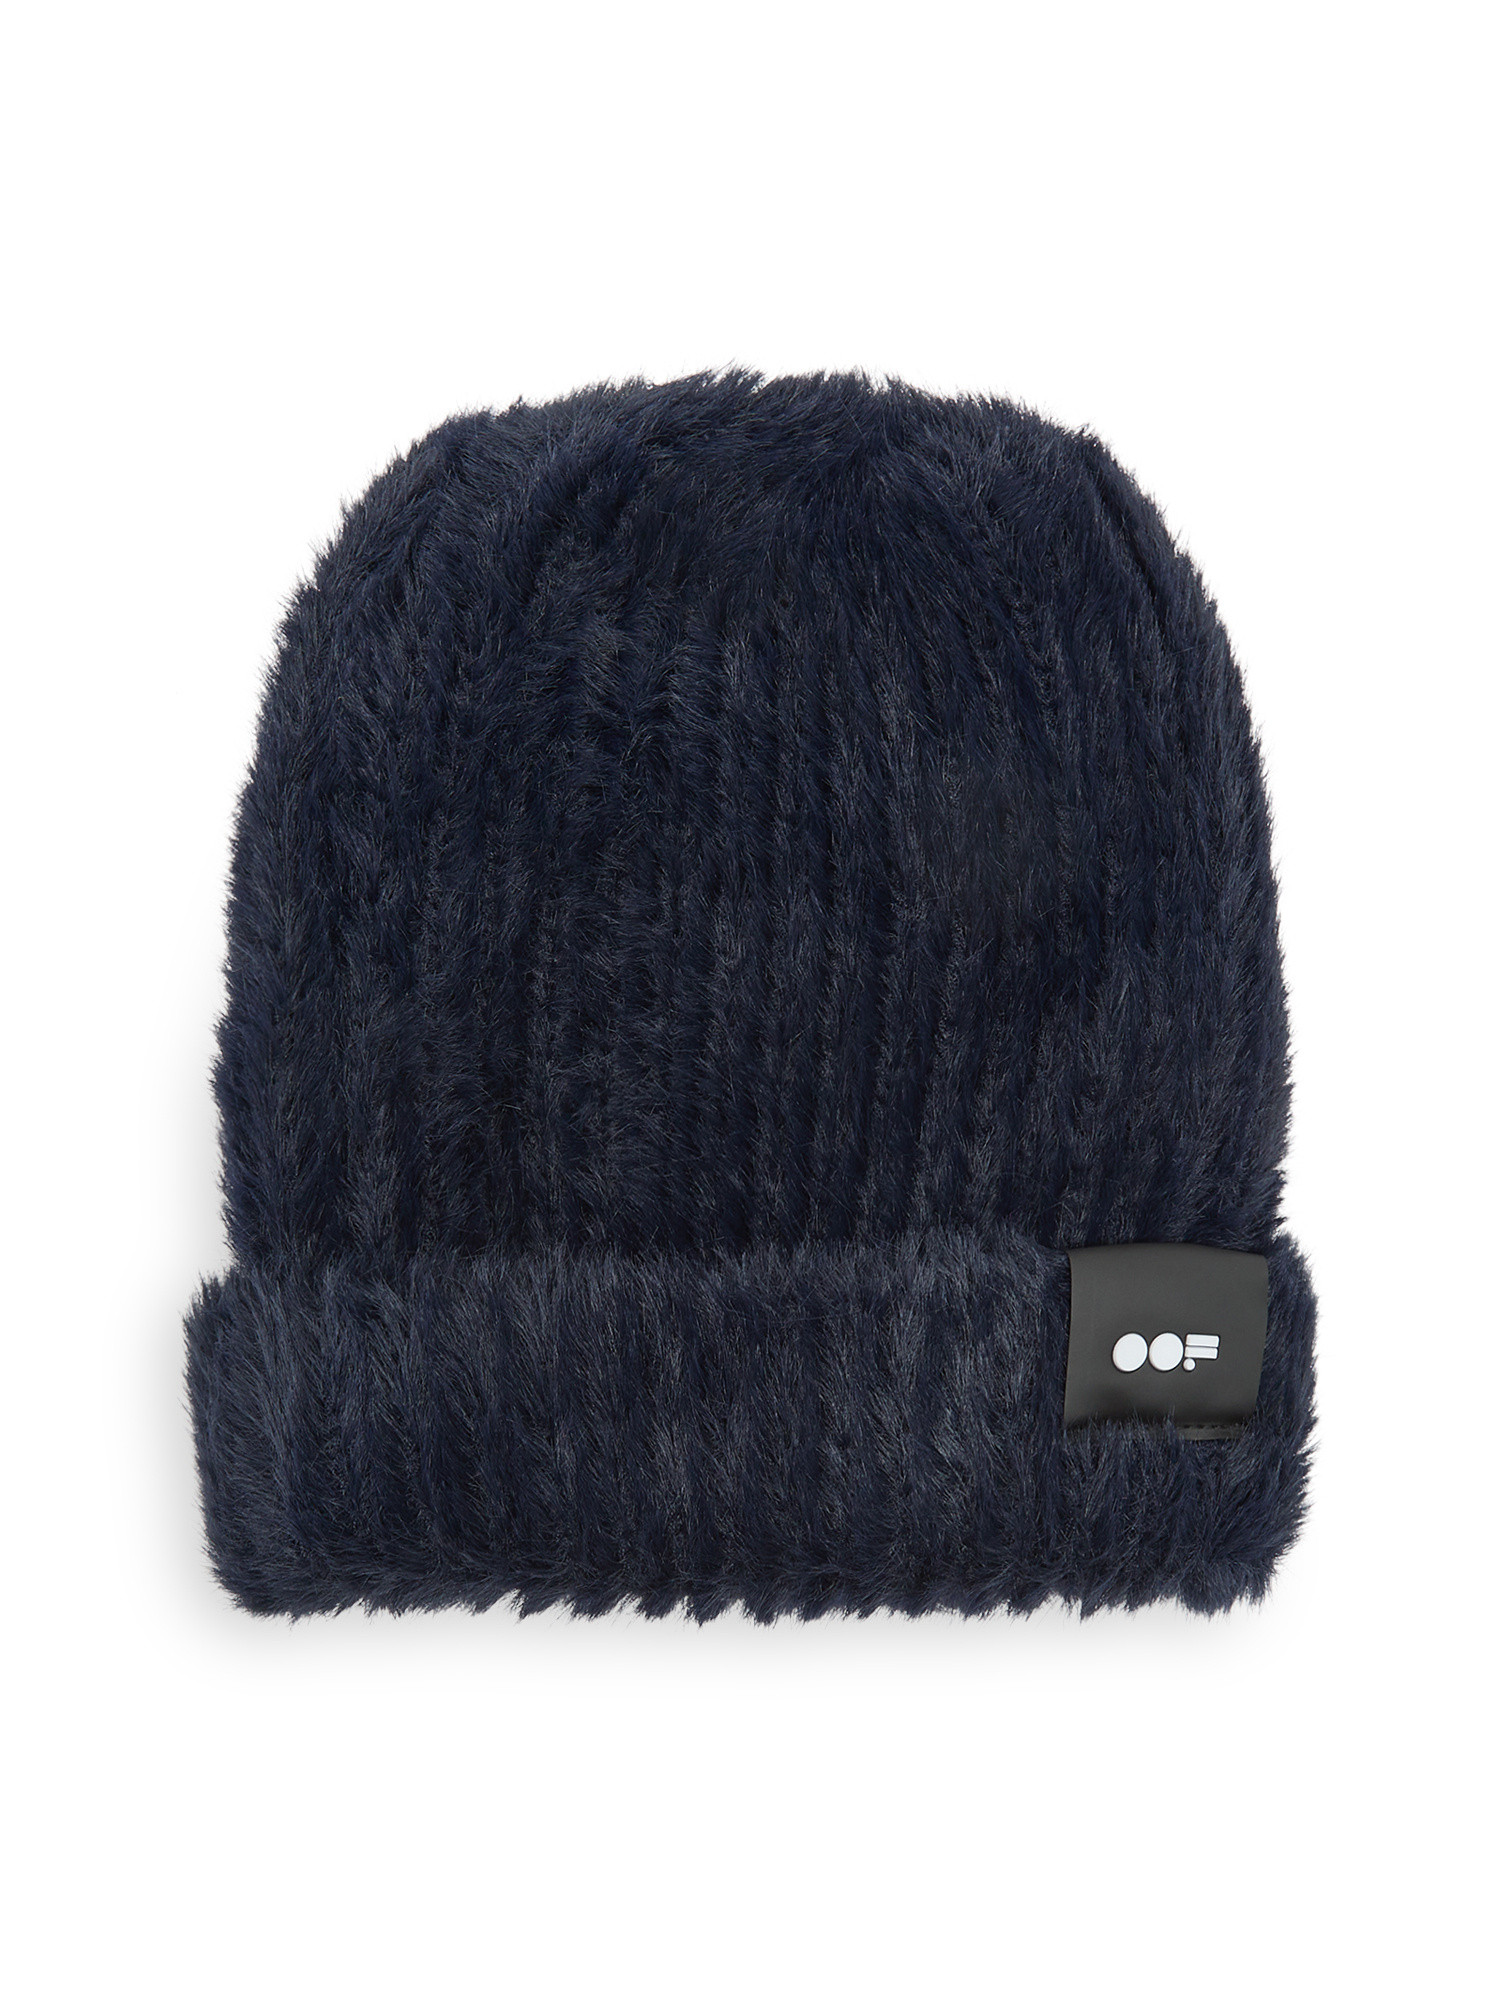 Oof Wear - Wool blend hat, Dark Blue, large image number 0